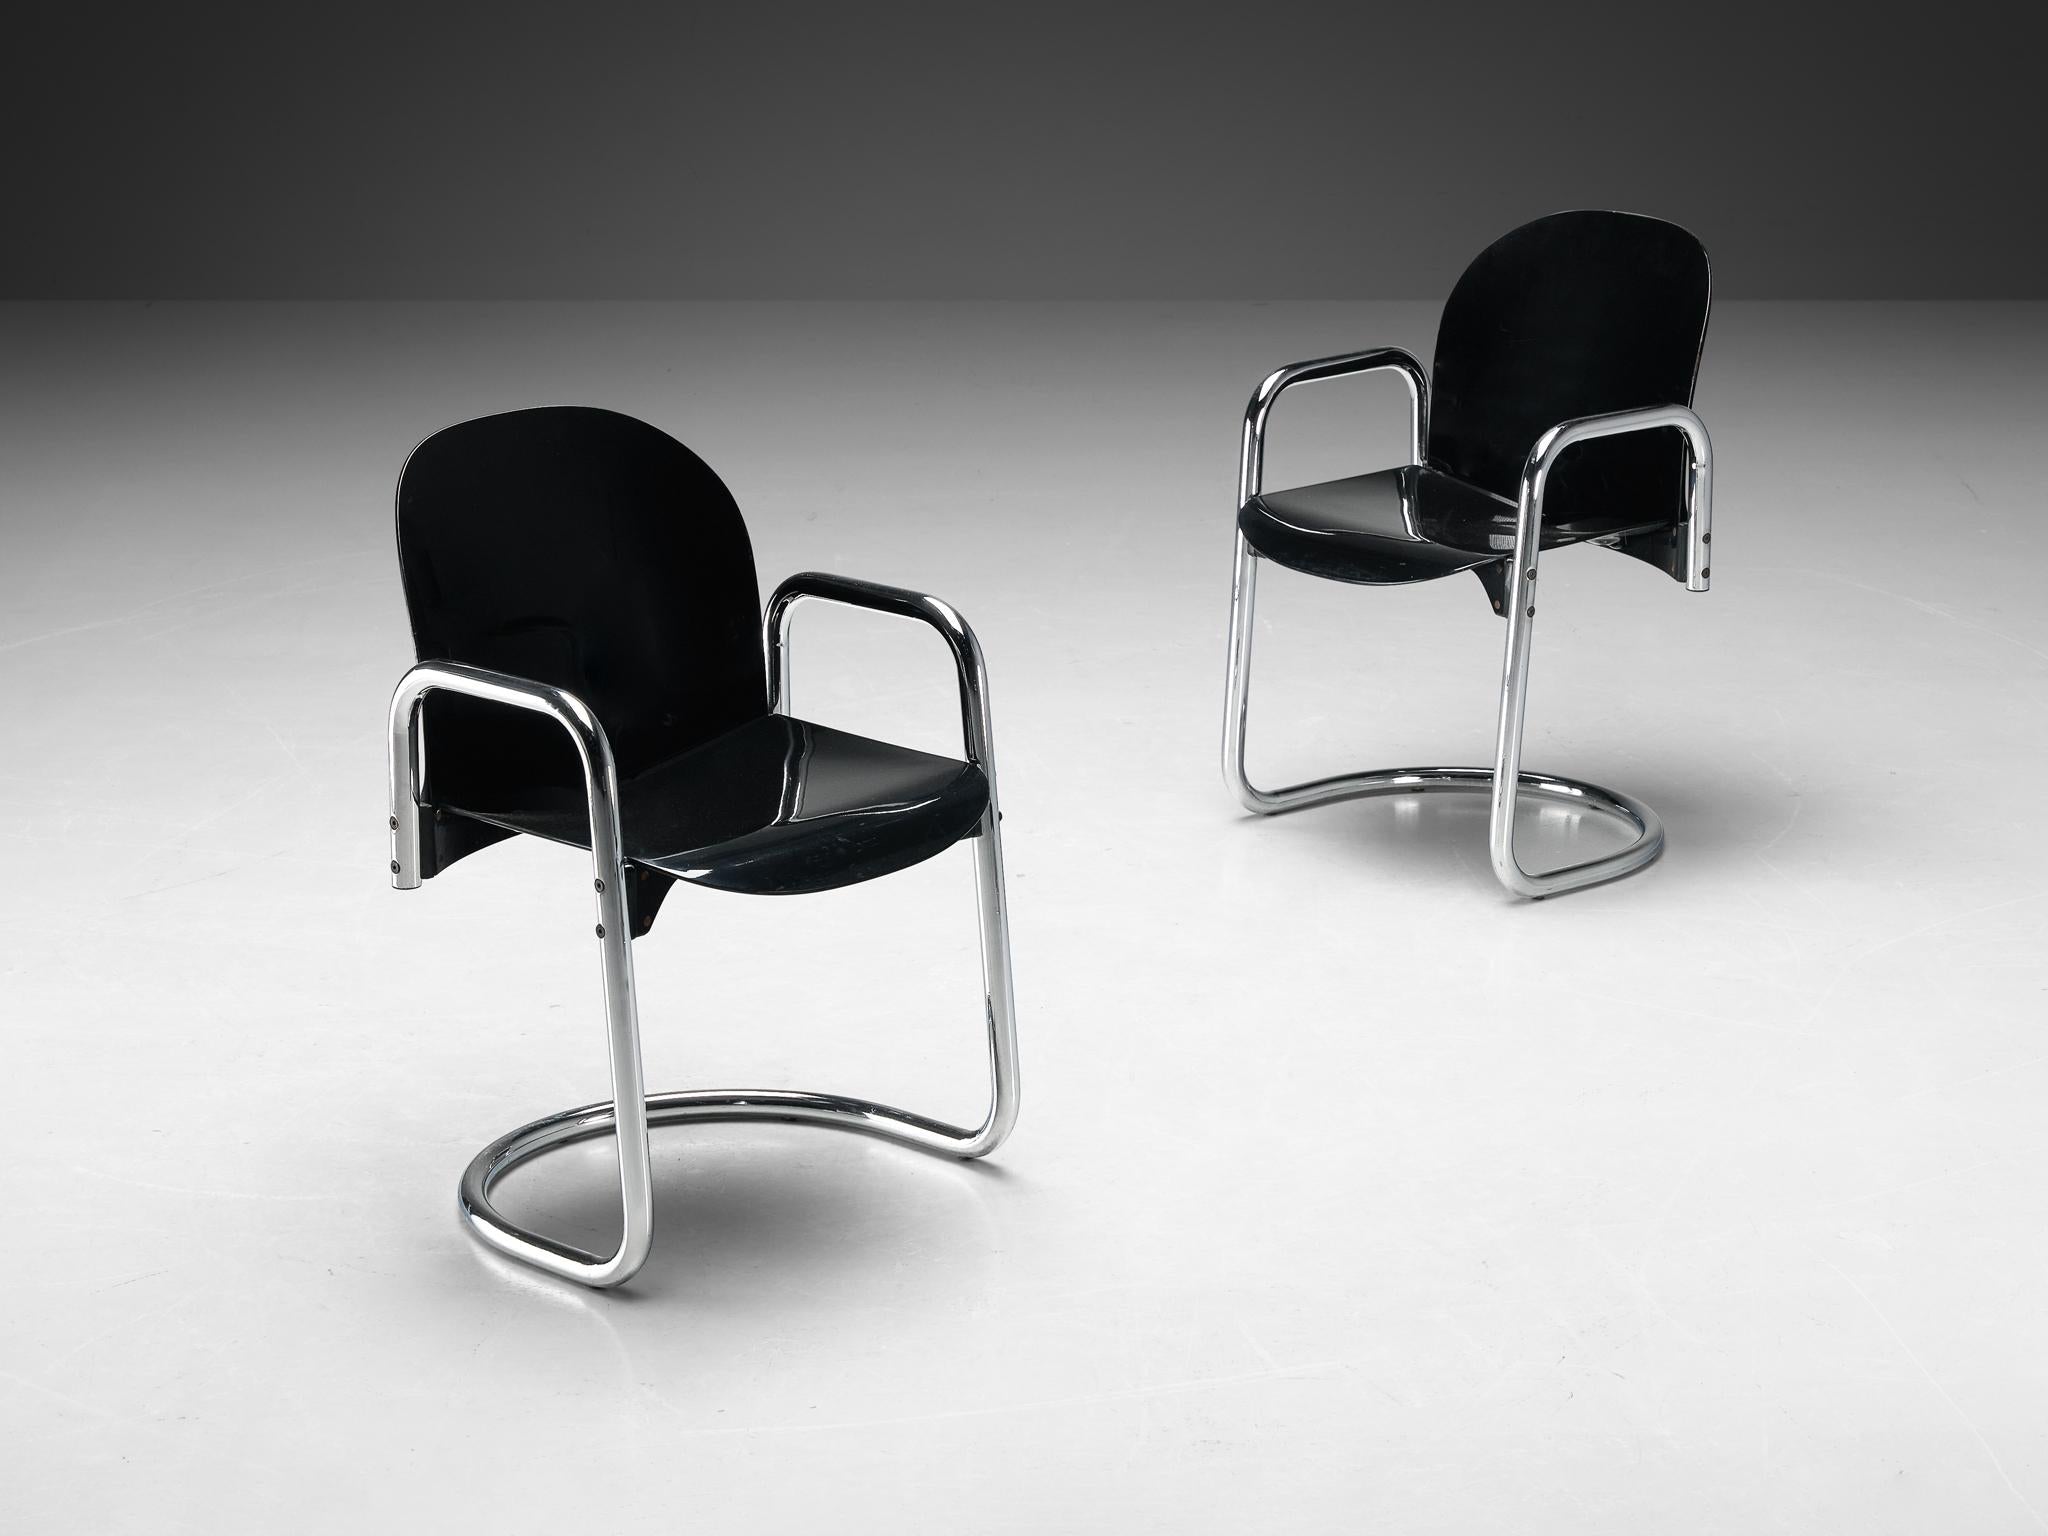 Afra & Tobia Scarpa for B&B Italia 'Dialogo Dessau' Dining Chairs